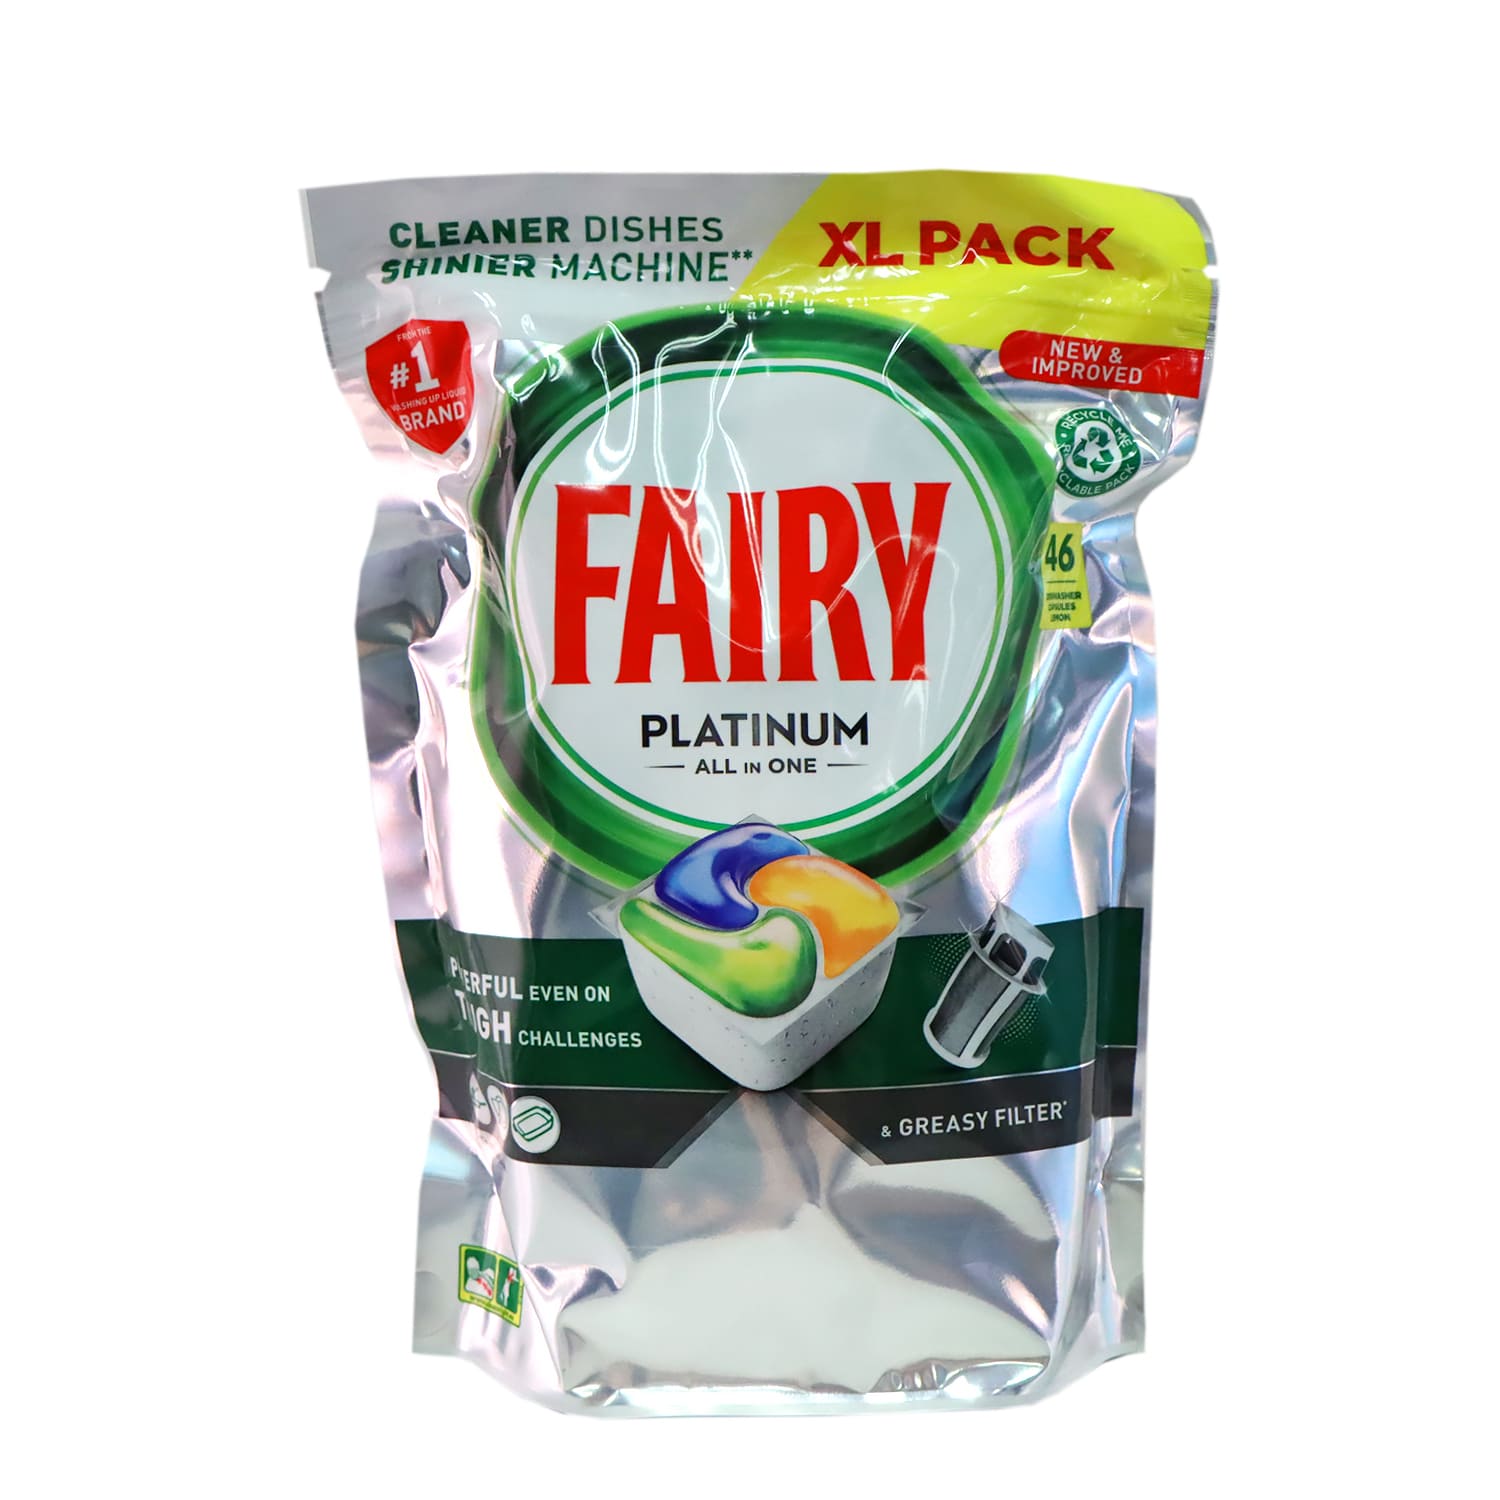 [P&G] Fairy Platinum All in One Dishwasher Capsules 46pcs